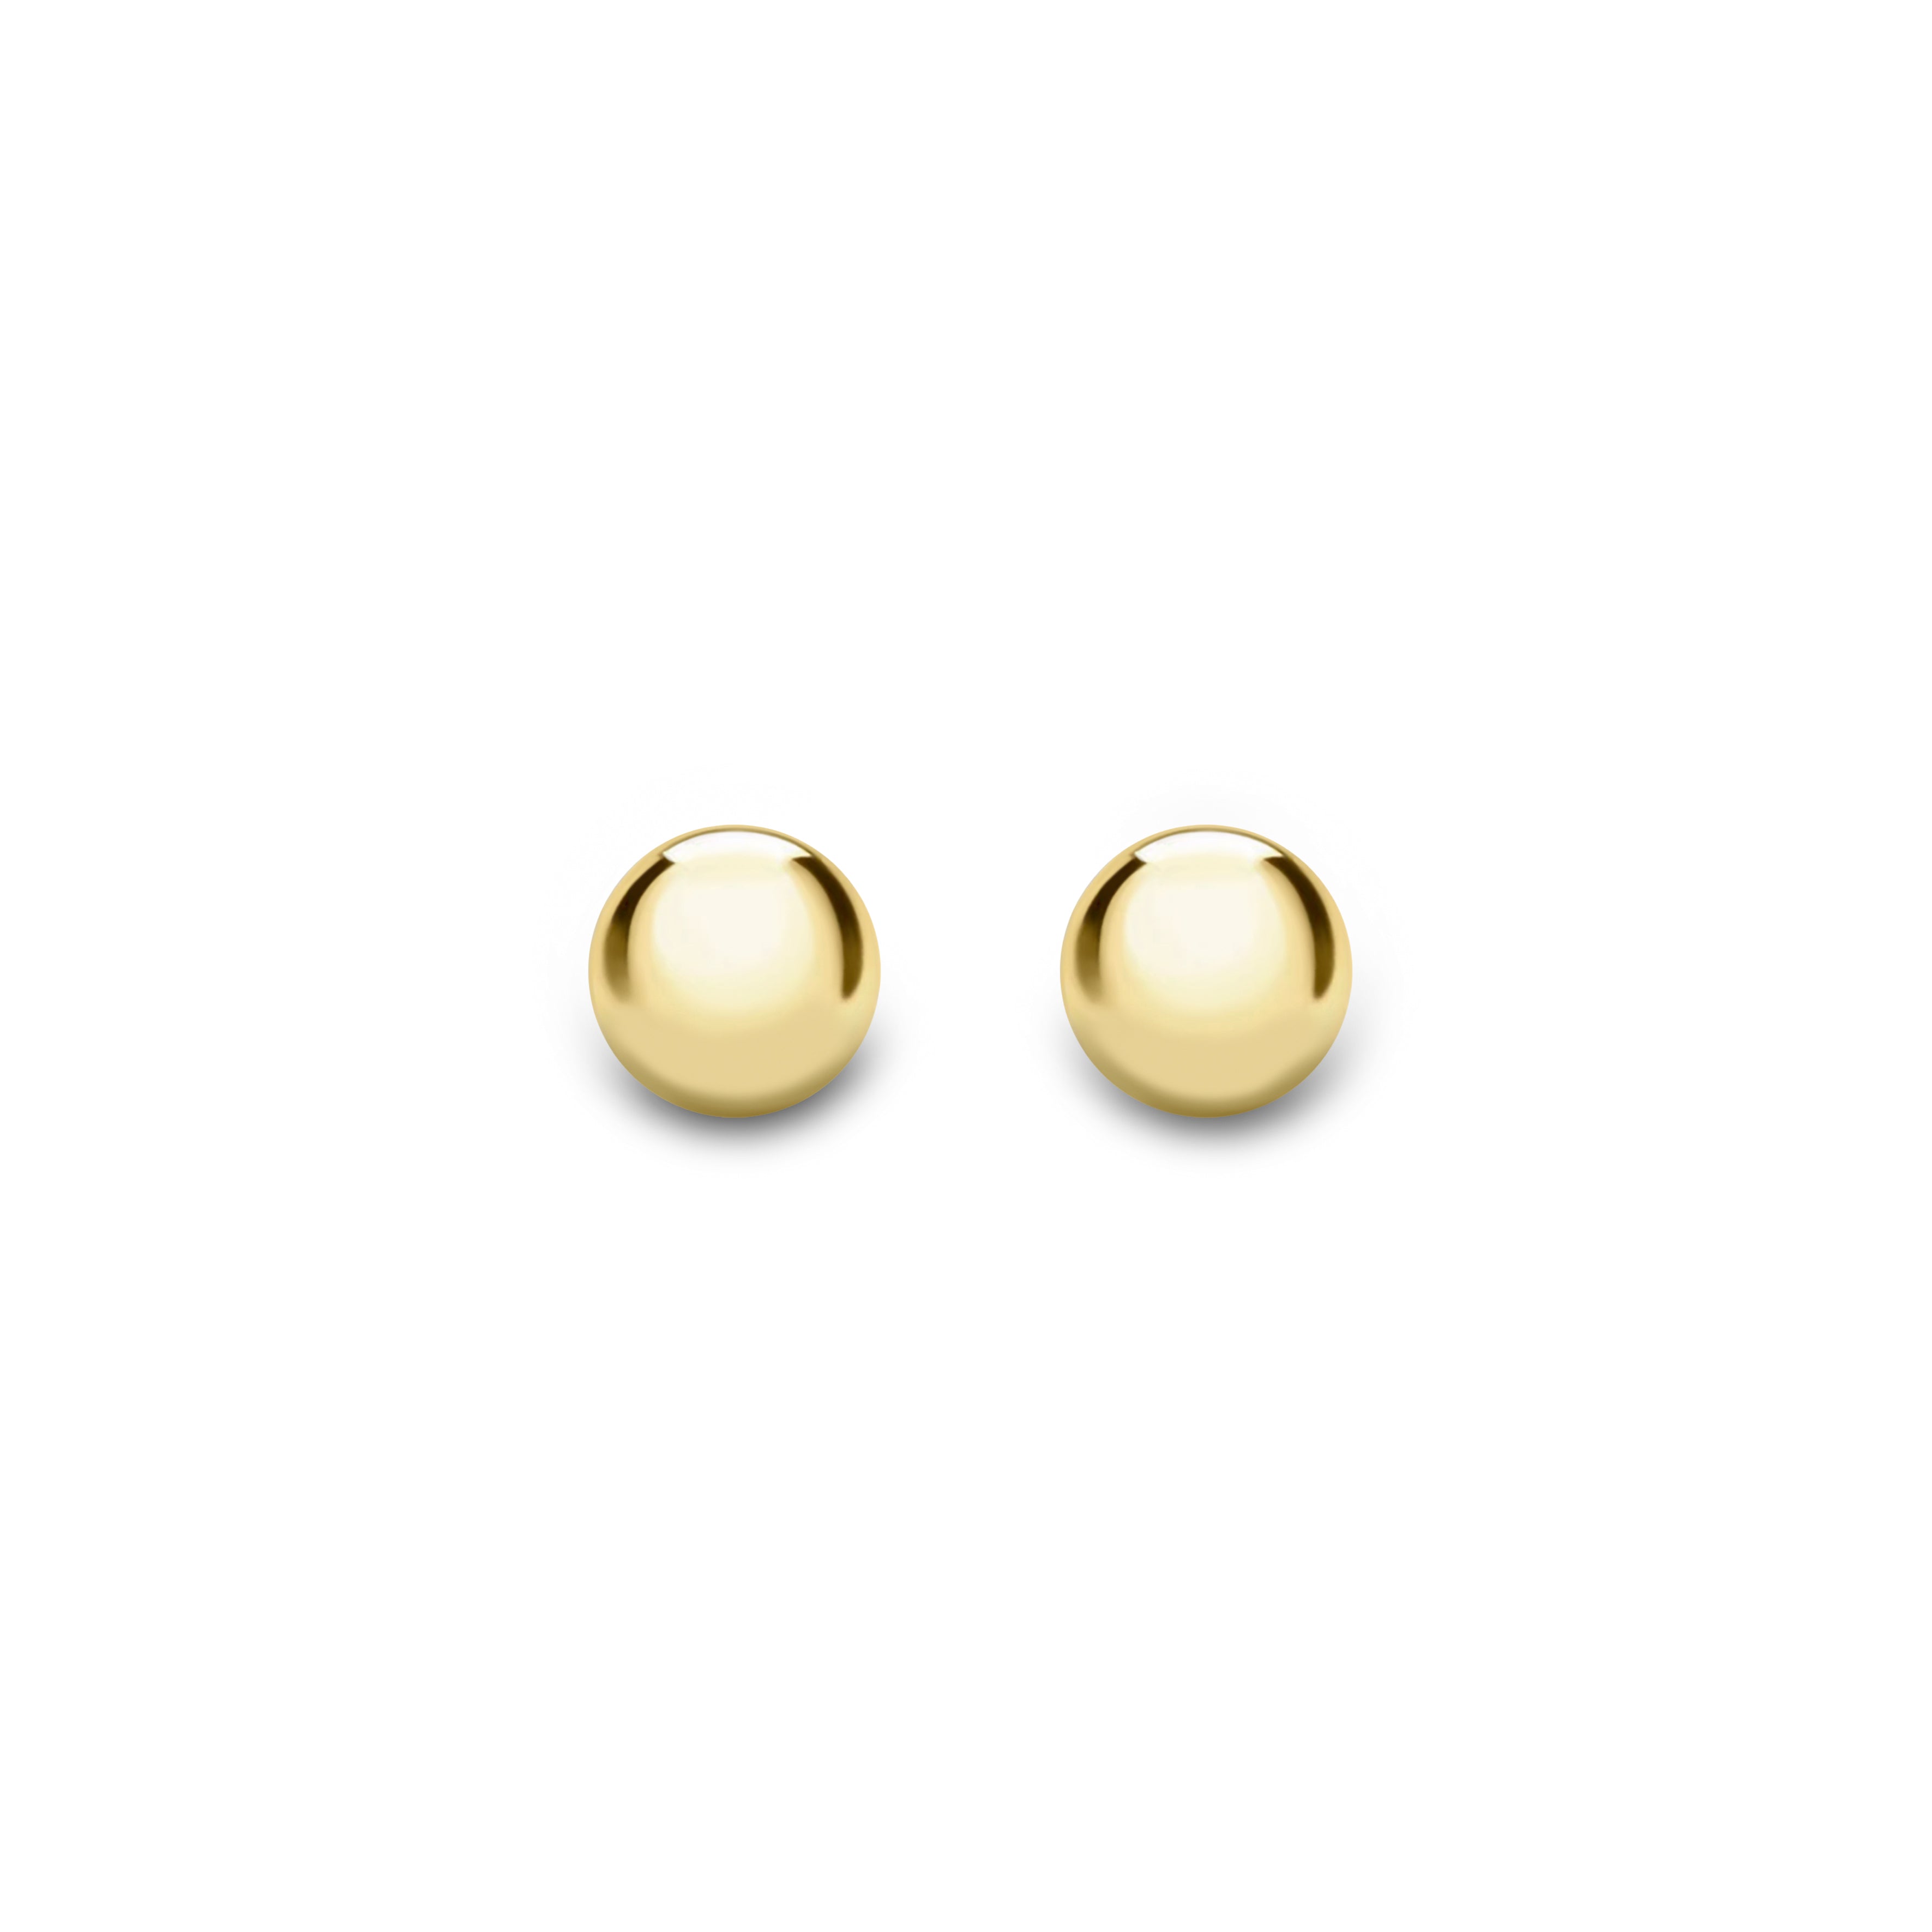 Buy 14K Gold Ball Earrings, 3MM 4MM 5MM 6MM 7MM 8MM 10MM Ball Earring Studs,  Gold Push Back Studs, White ,yellow Gold Ball Stud Earrings Online in India  - Etsy